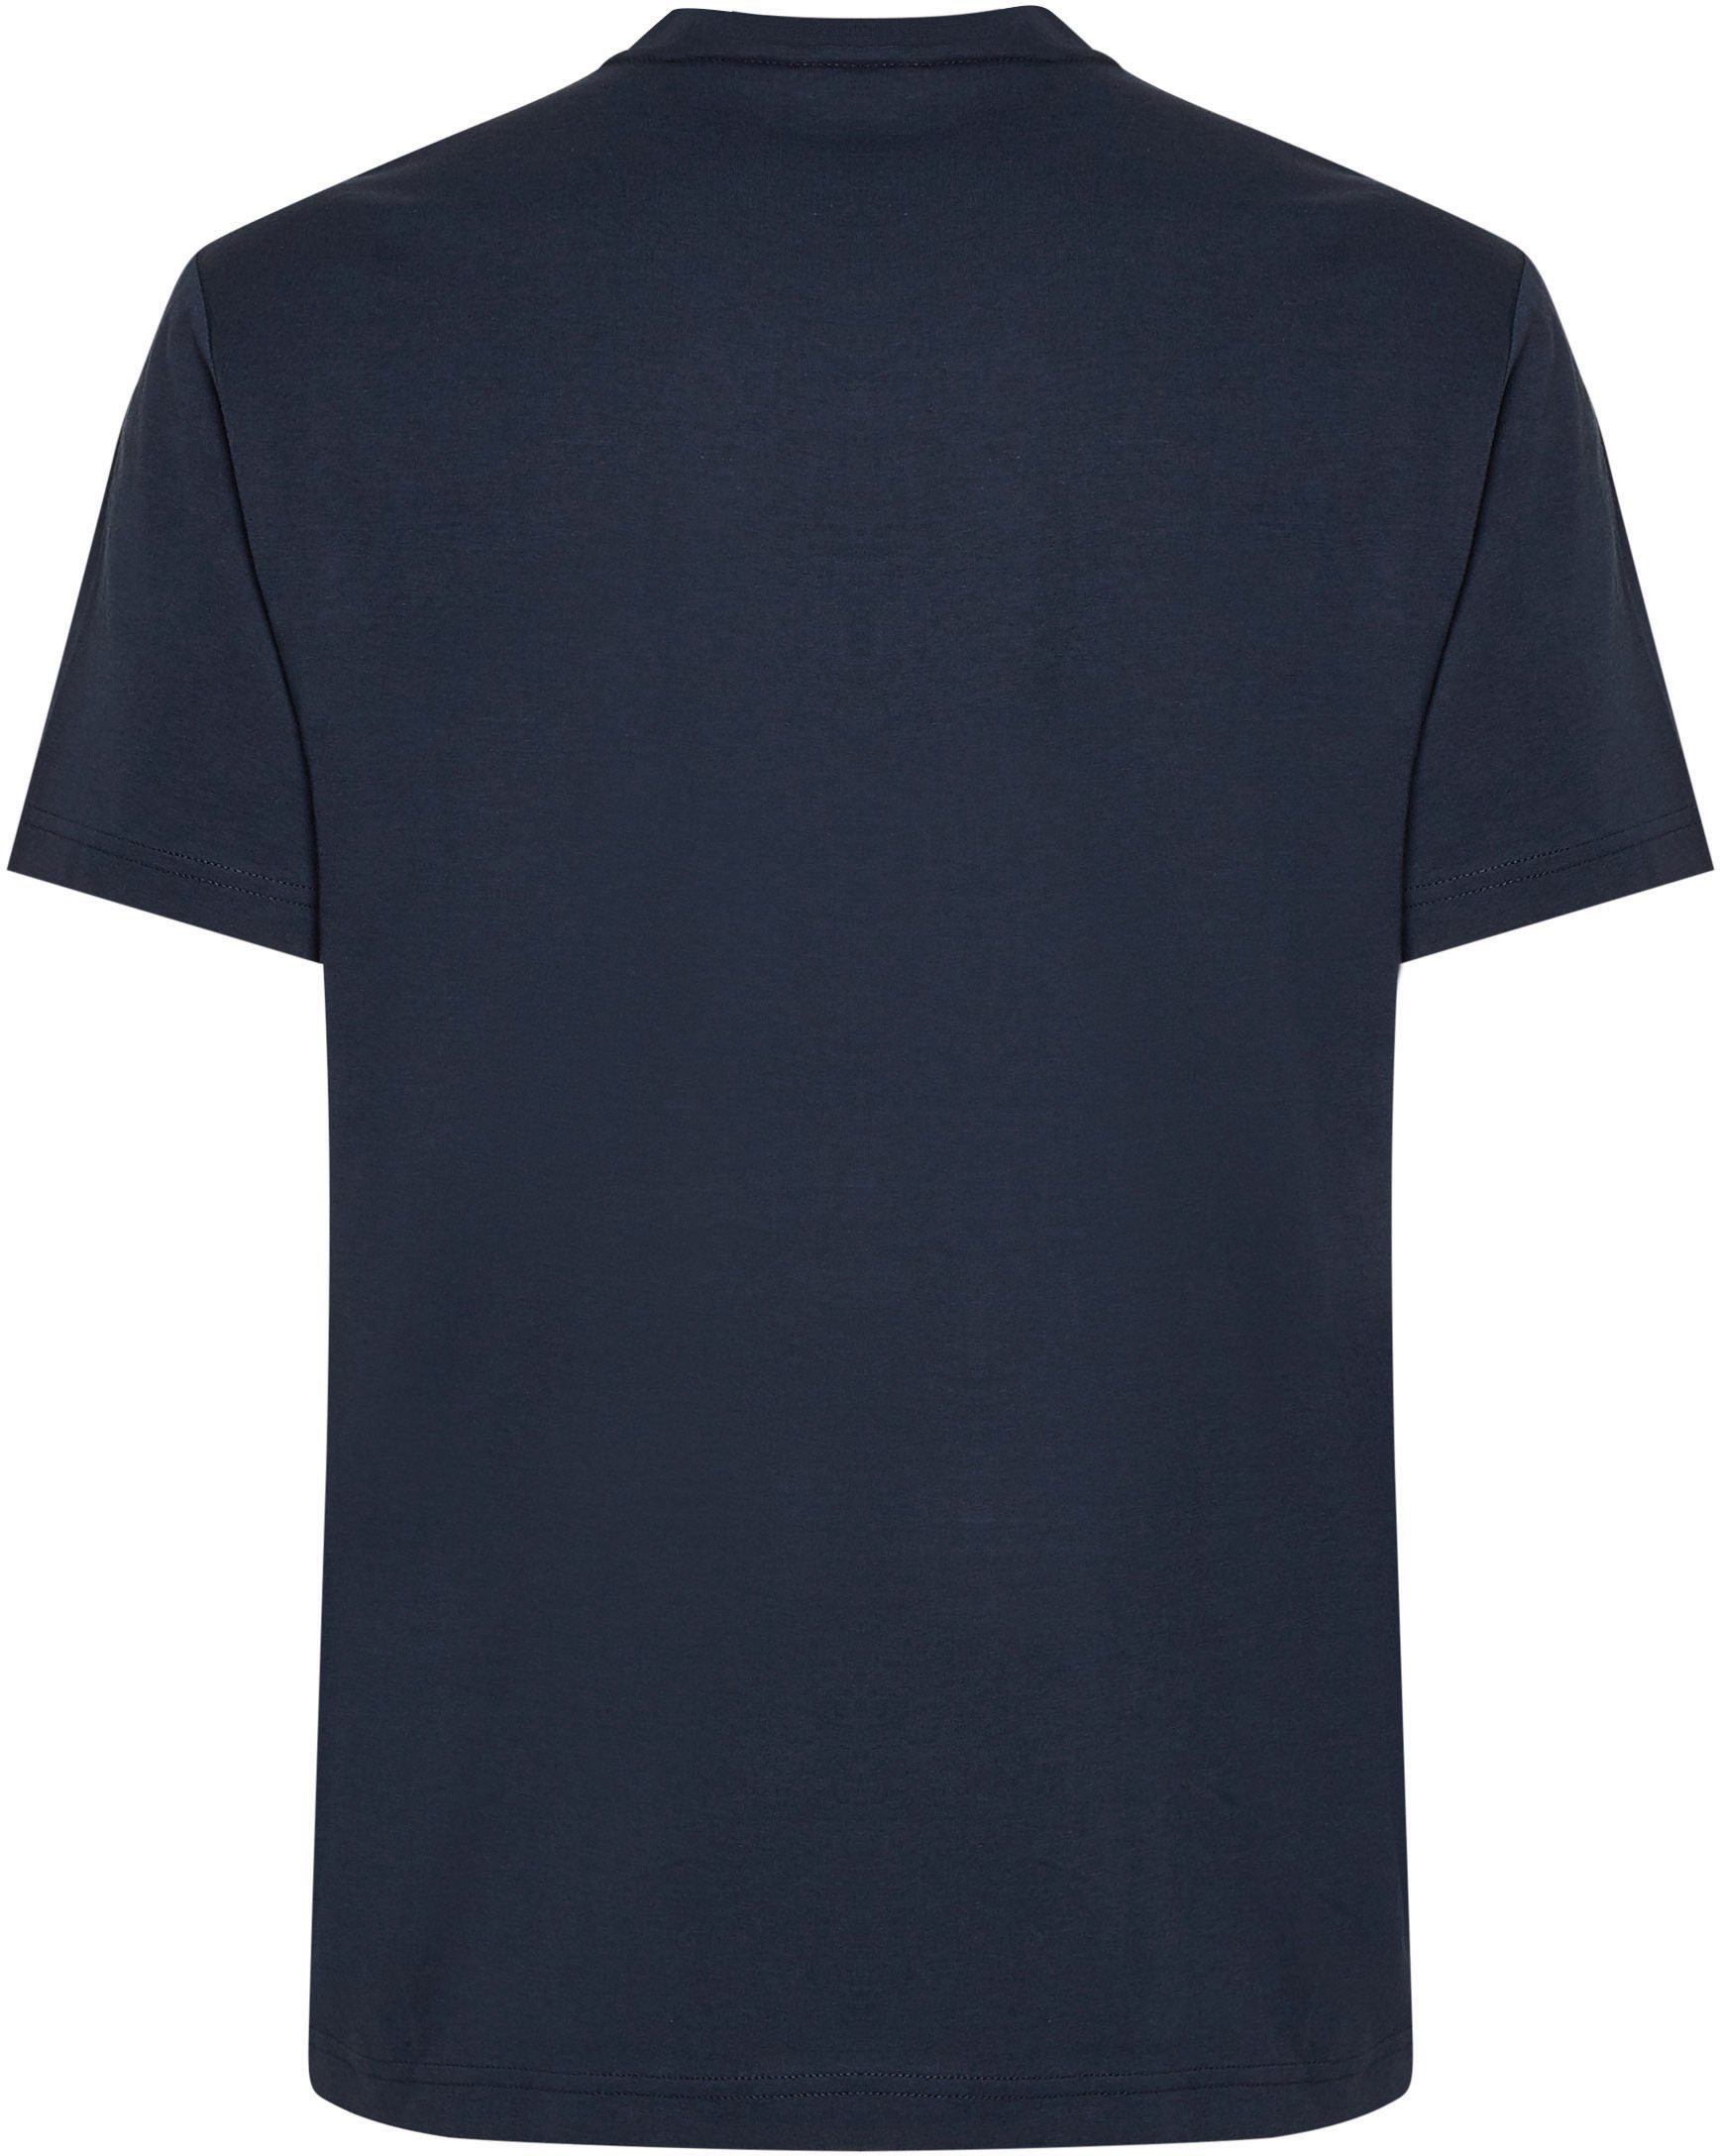 LOGO Calvin Klein T-Shirt navy STRIPED calvin RAISED